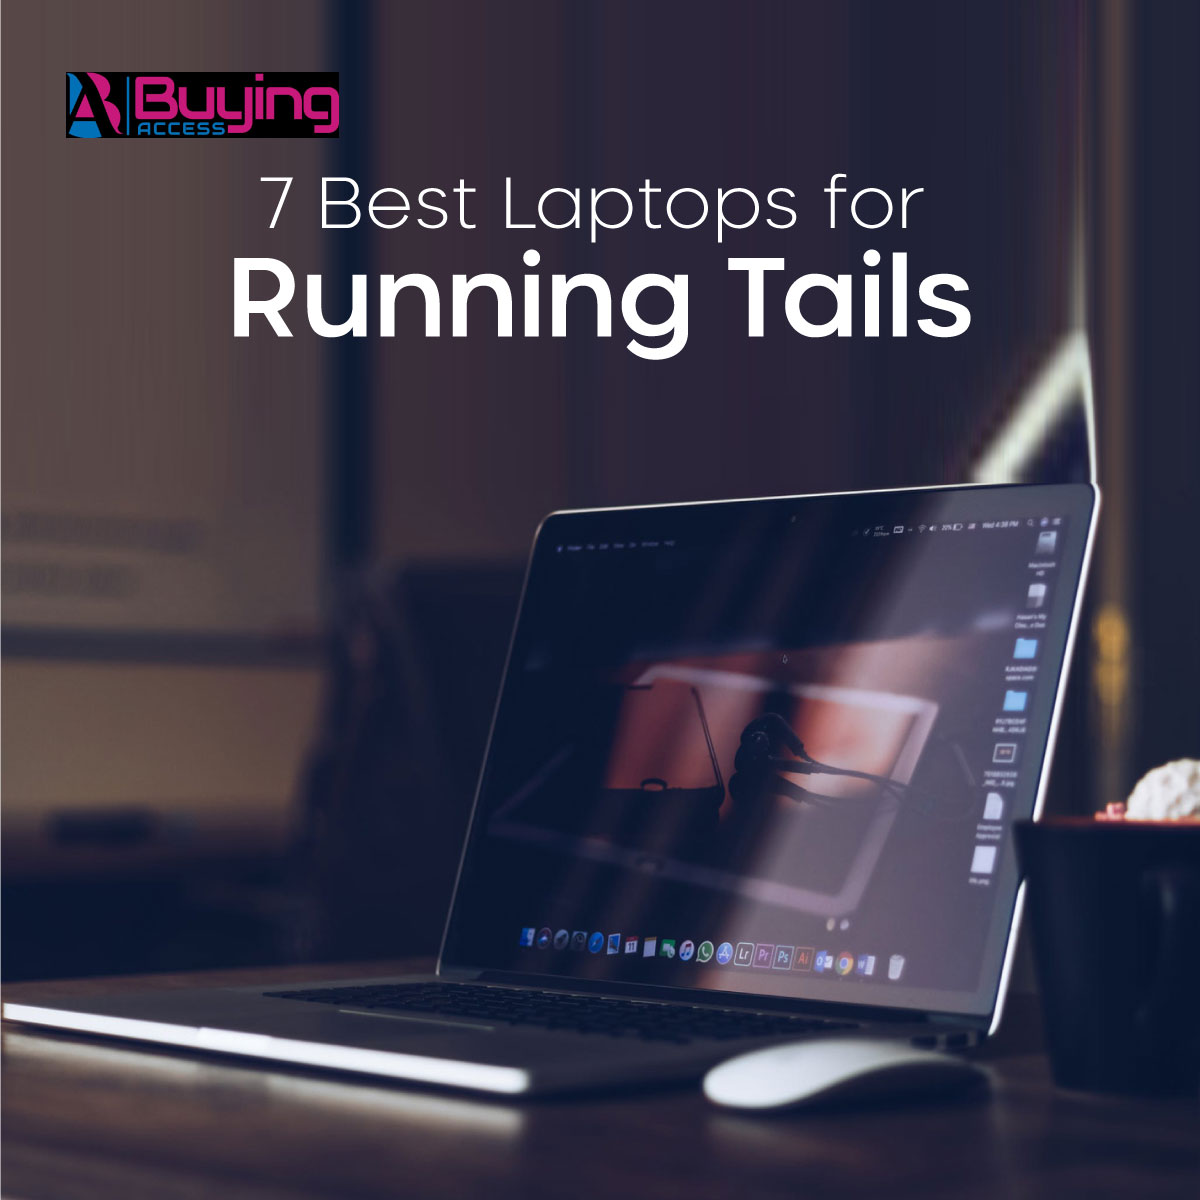 Laptops for Running Tails